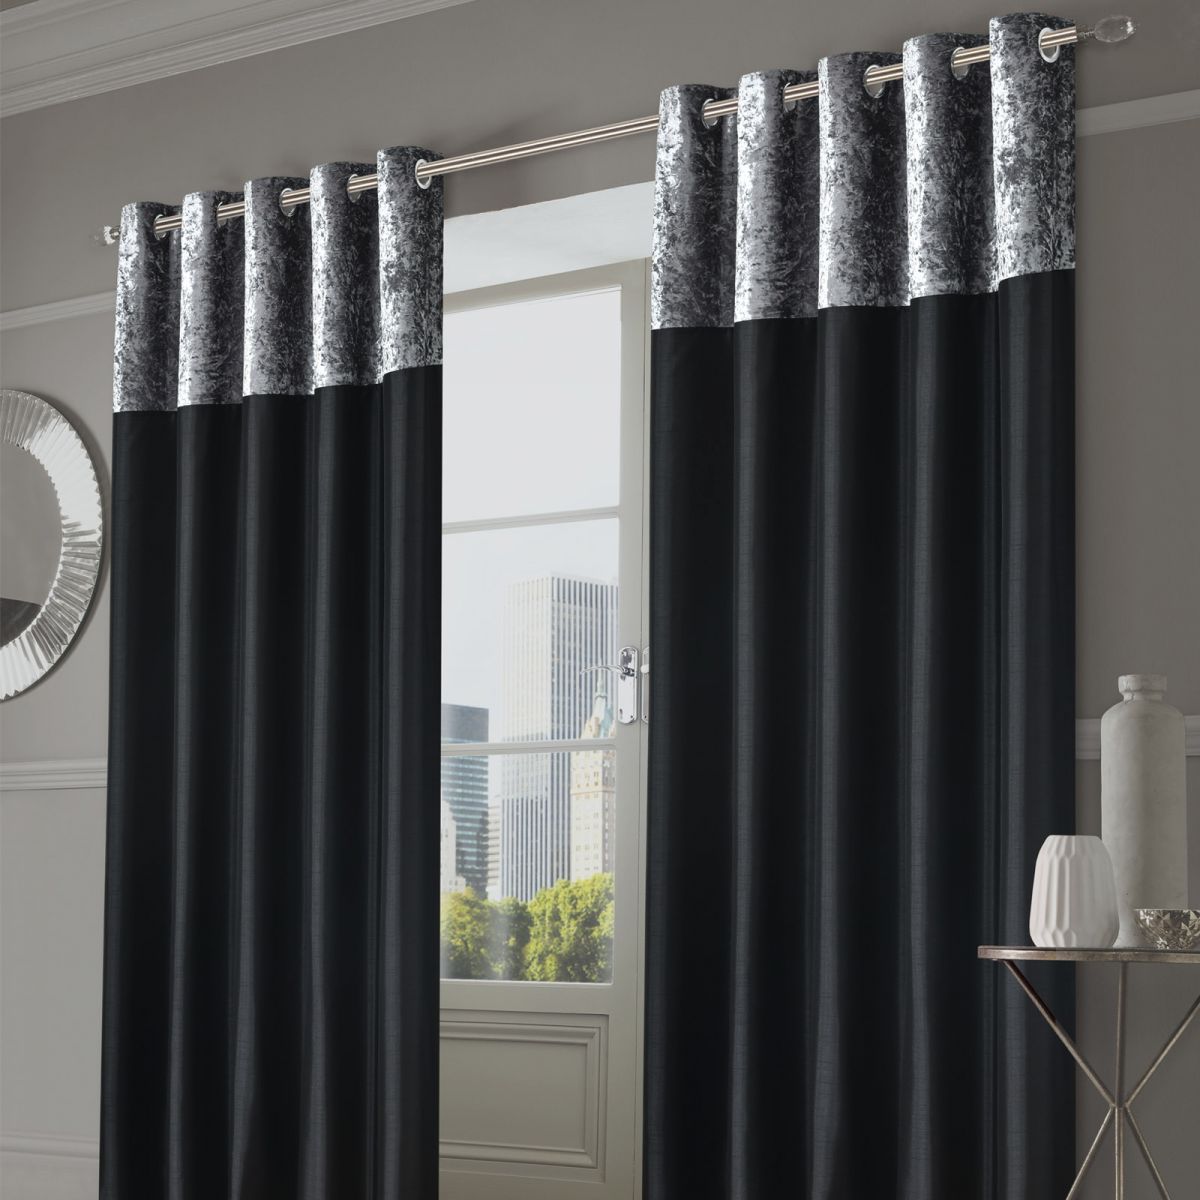 Sienna Home Manhattan Crushed Velvet Band Eyelet Curtains - Black, 90" x 54"